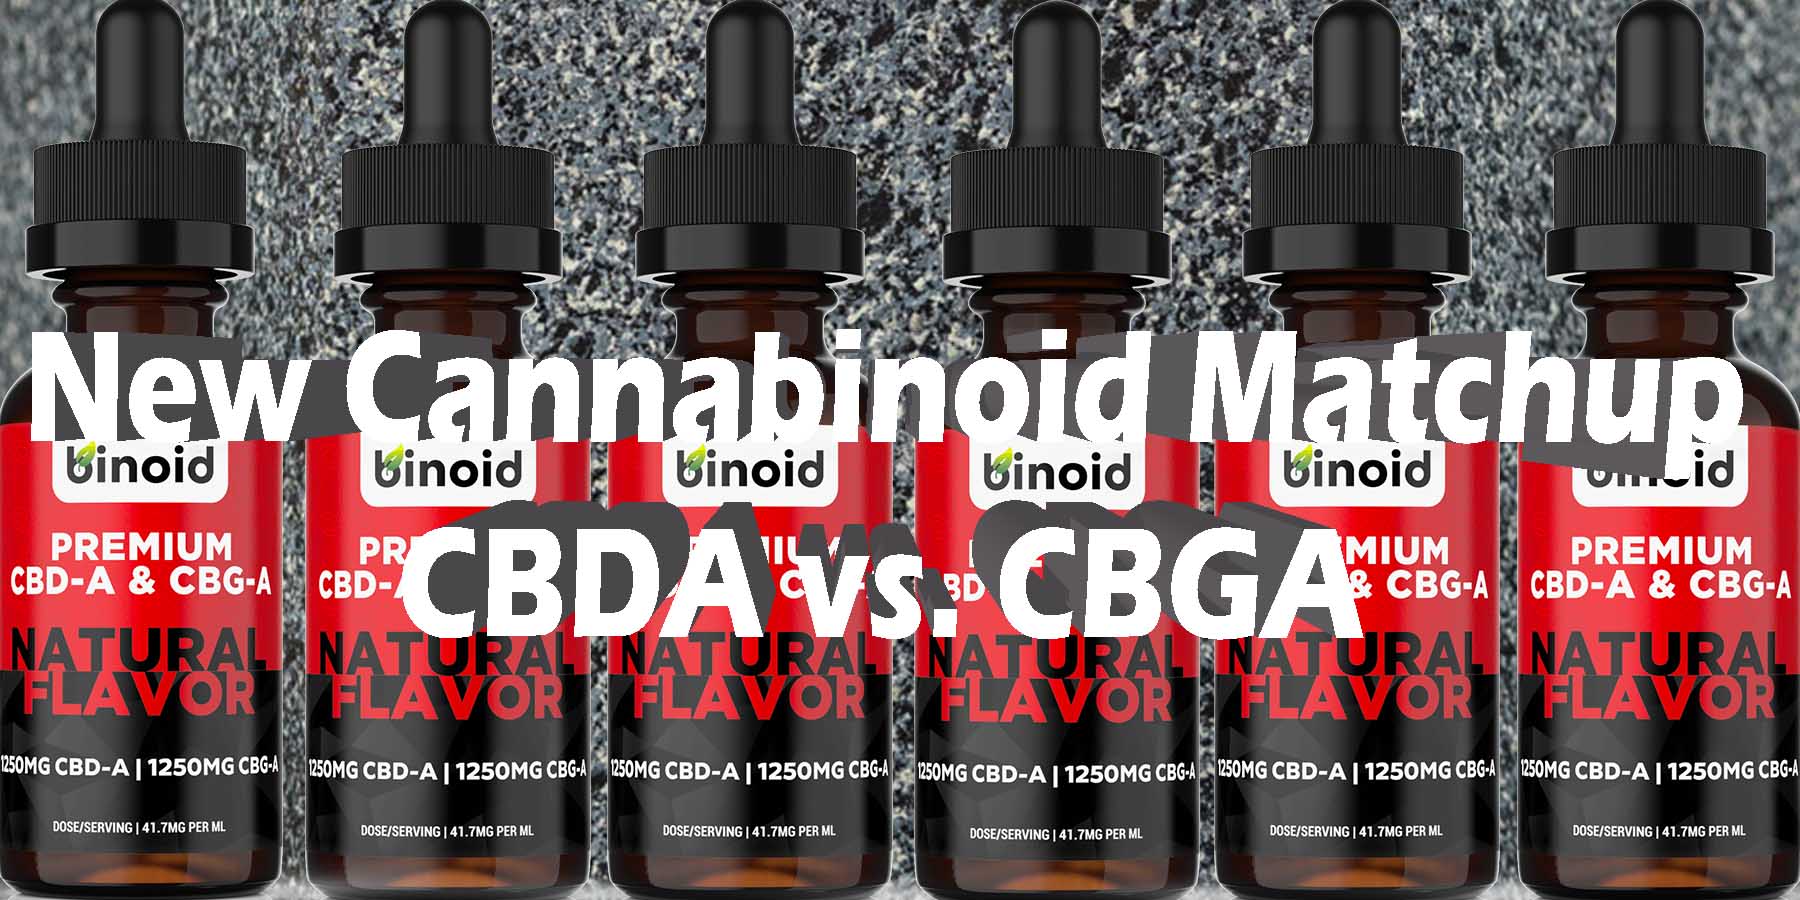 New Cannabinoid Matchup CBDA vs Coupon Discount For Smoking High Smoke Shop Online Near Me Strongest Binoid Delta Extrax Buy Online BestPlace LowestPrice Coupon Binoid